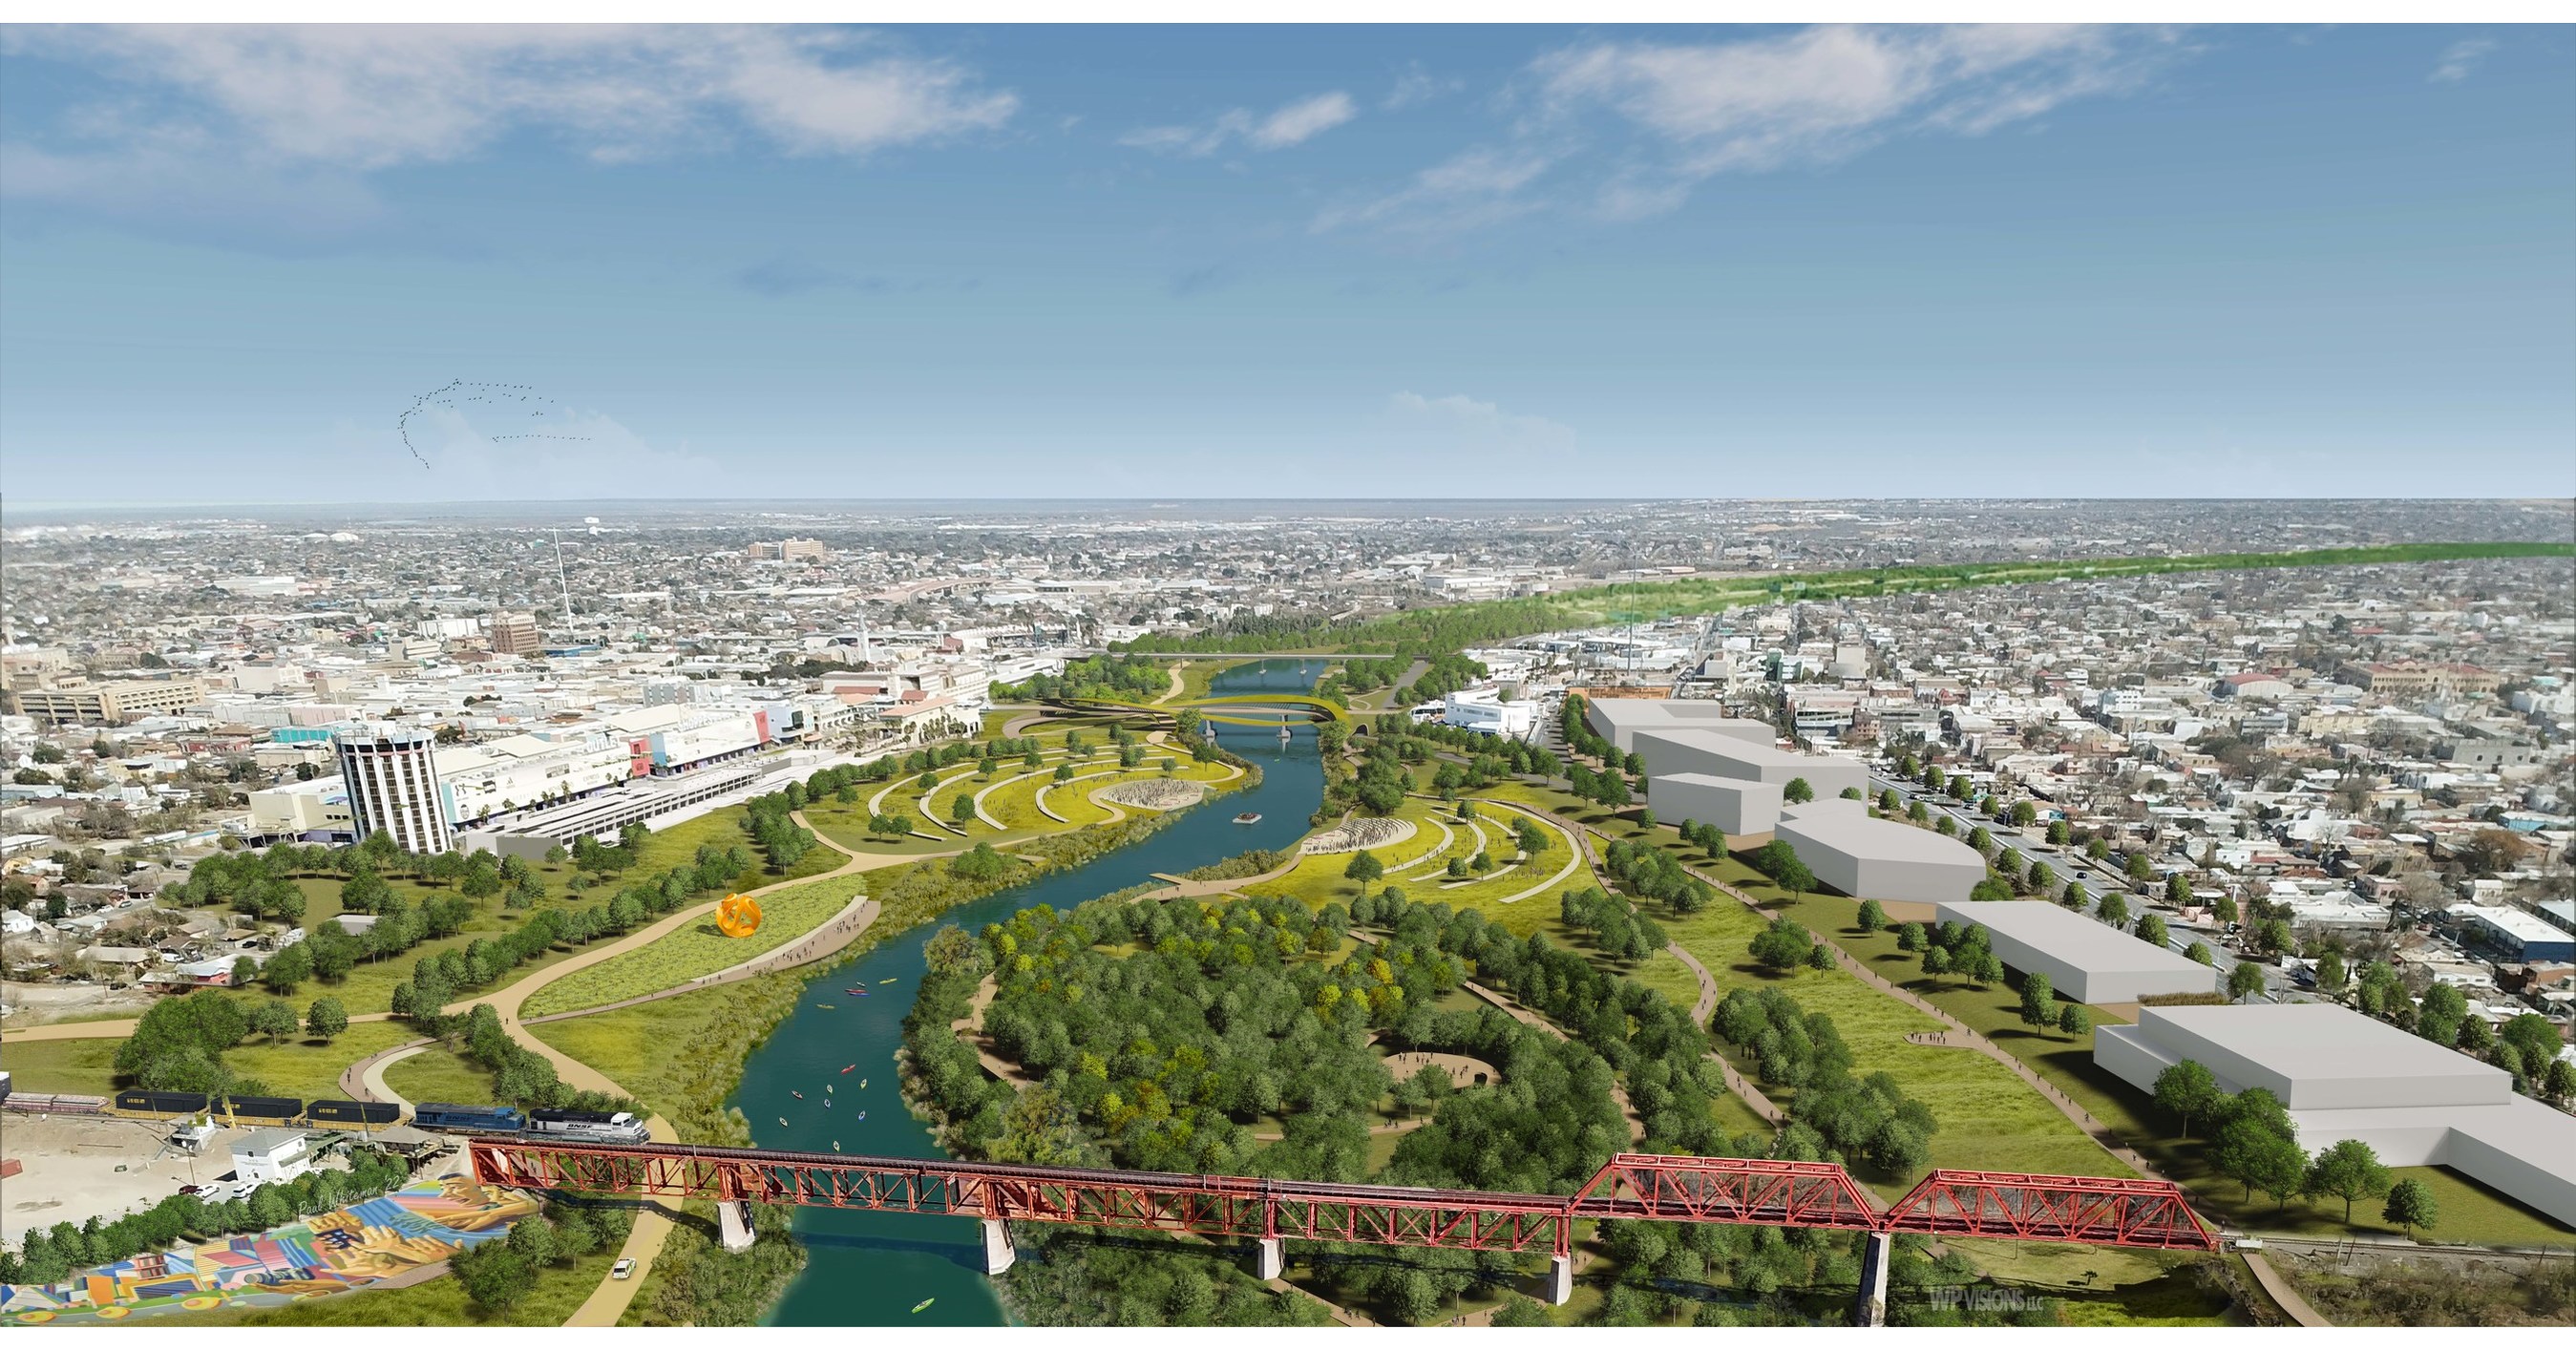 Overland Partners Architects Chosen to Create Design Plan For 6.3-mile Binational River Park along Rio Grande-Rio Bravo River Between Laredo, Texas and Nuevo Laredo, Mexico